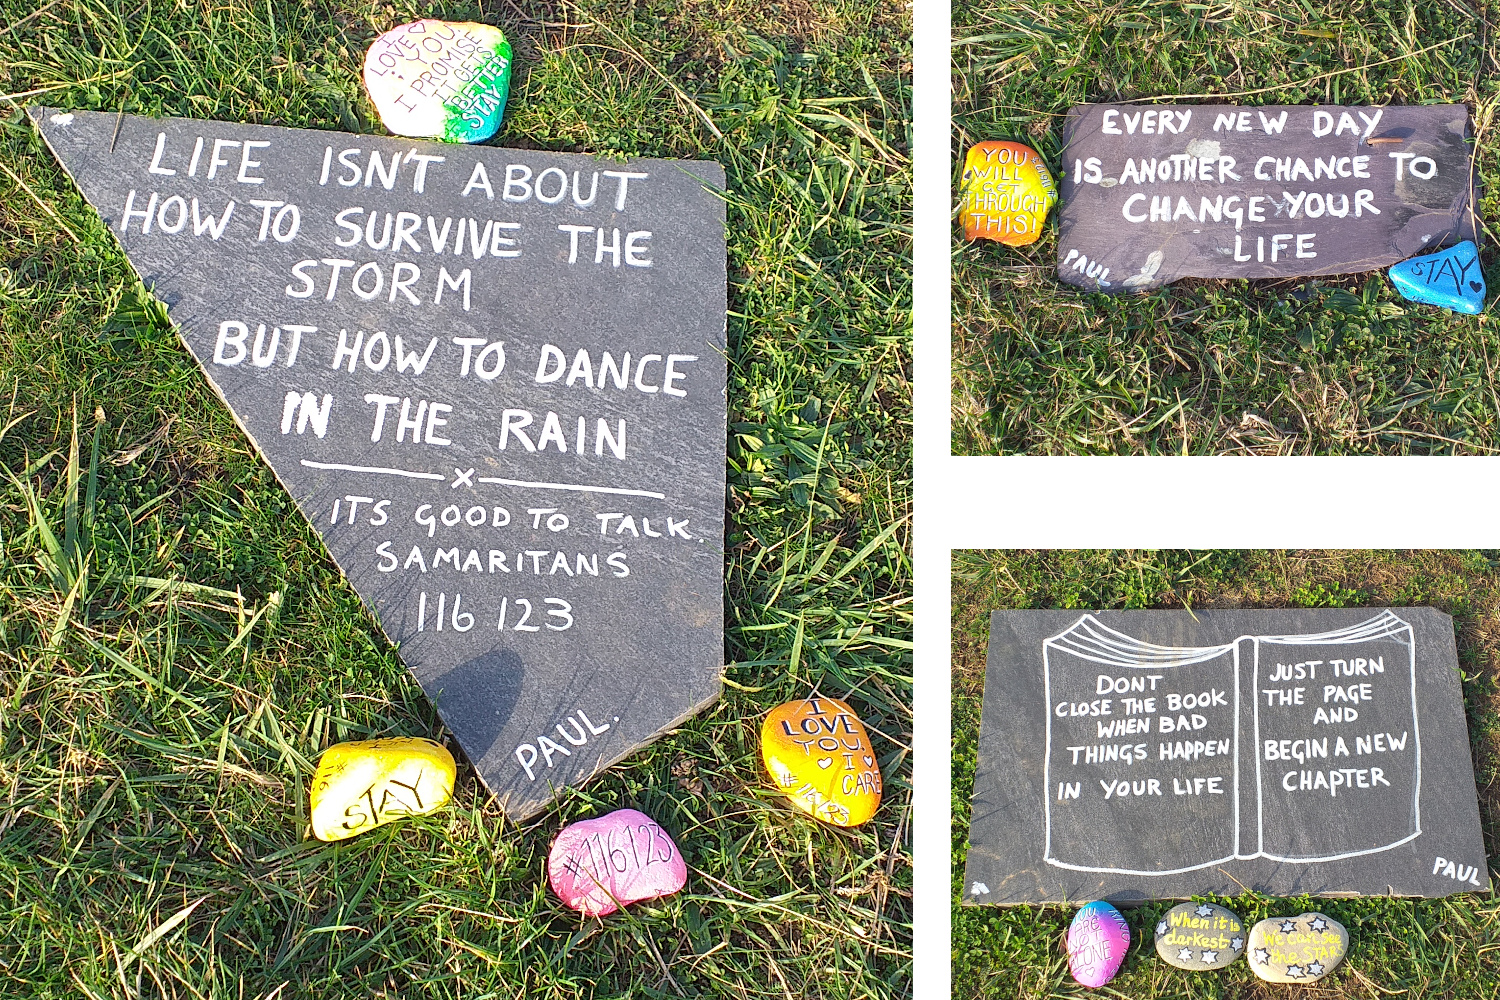 Inspirational Messages Written on Stones